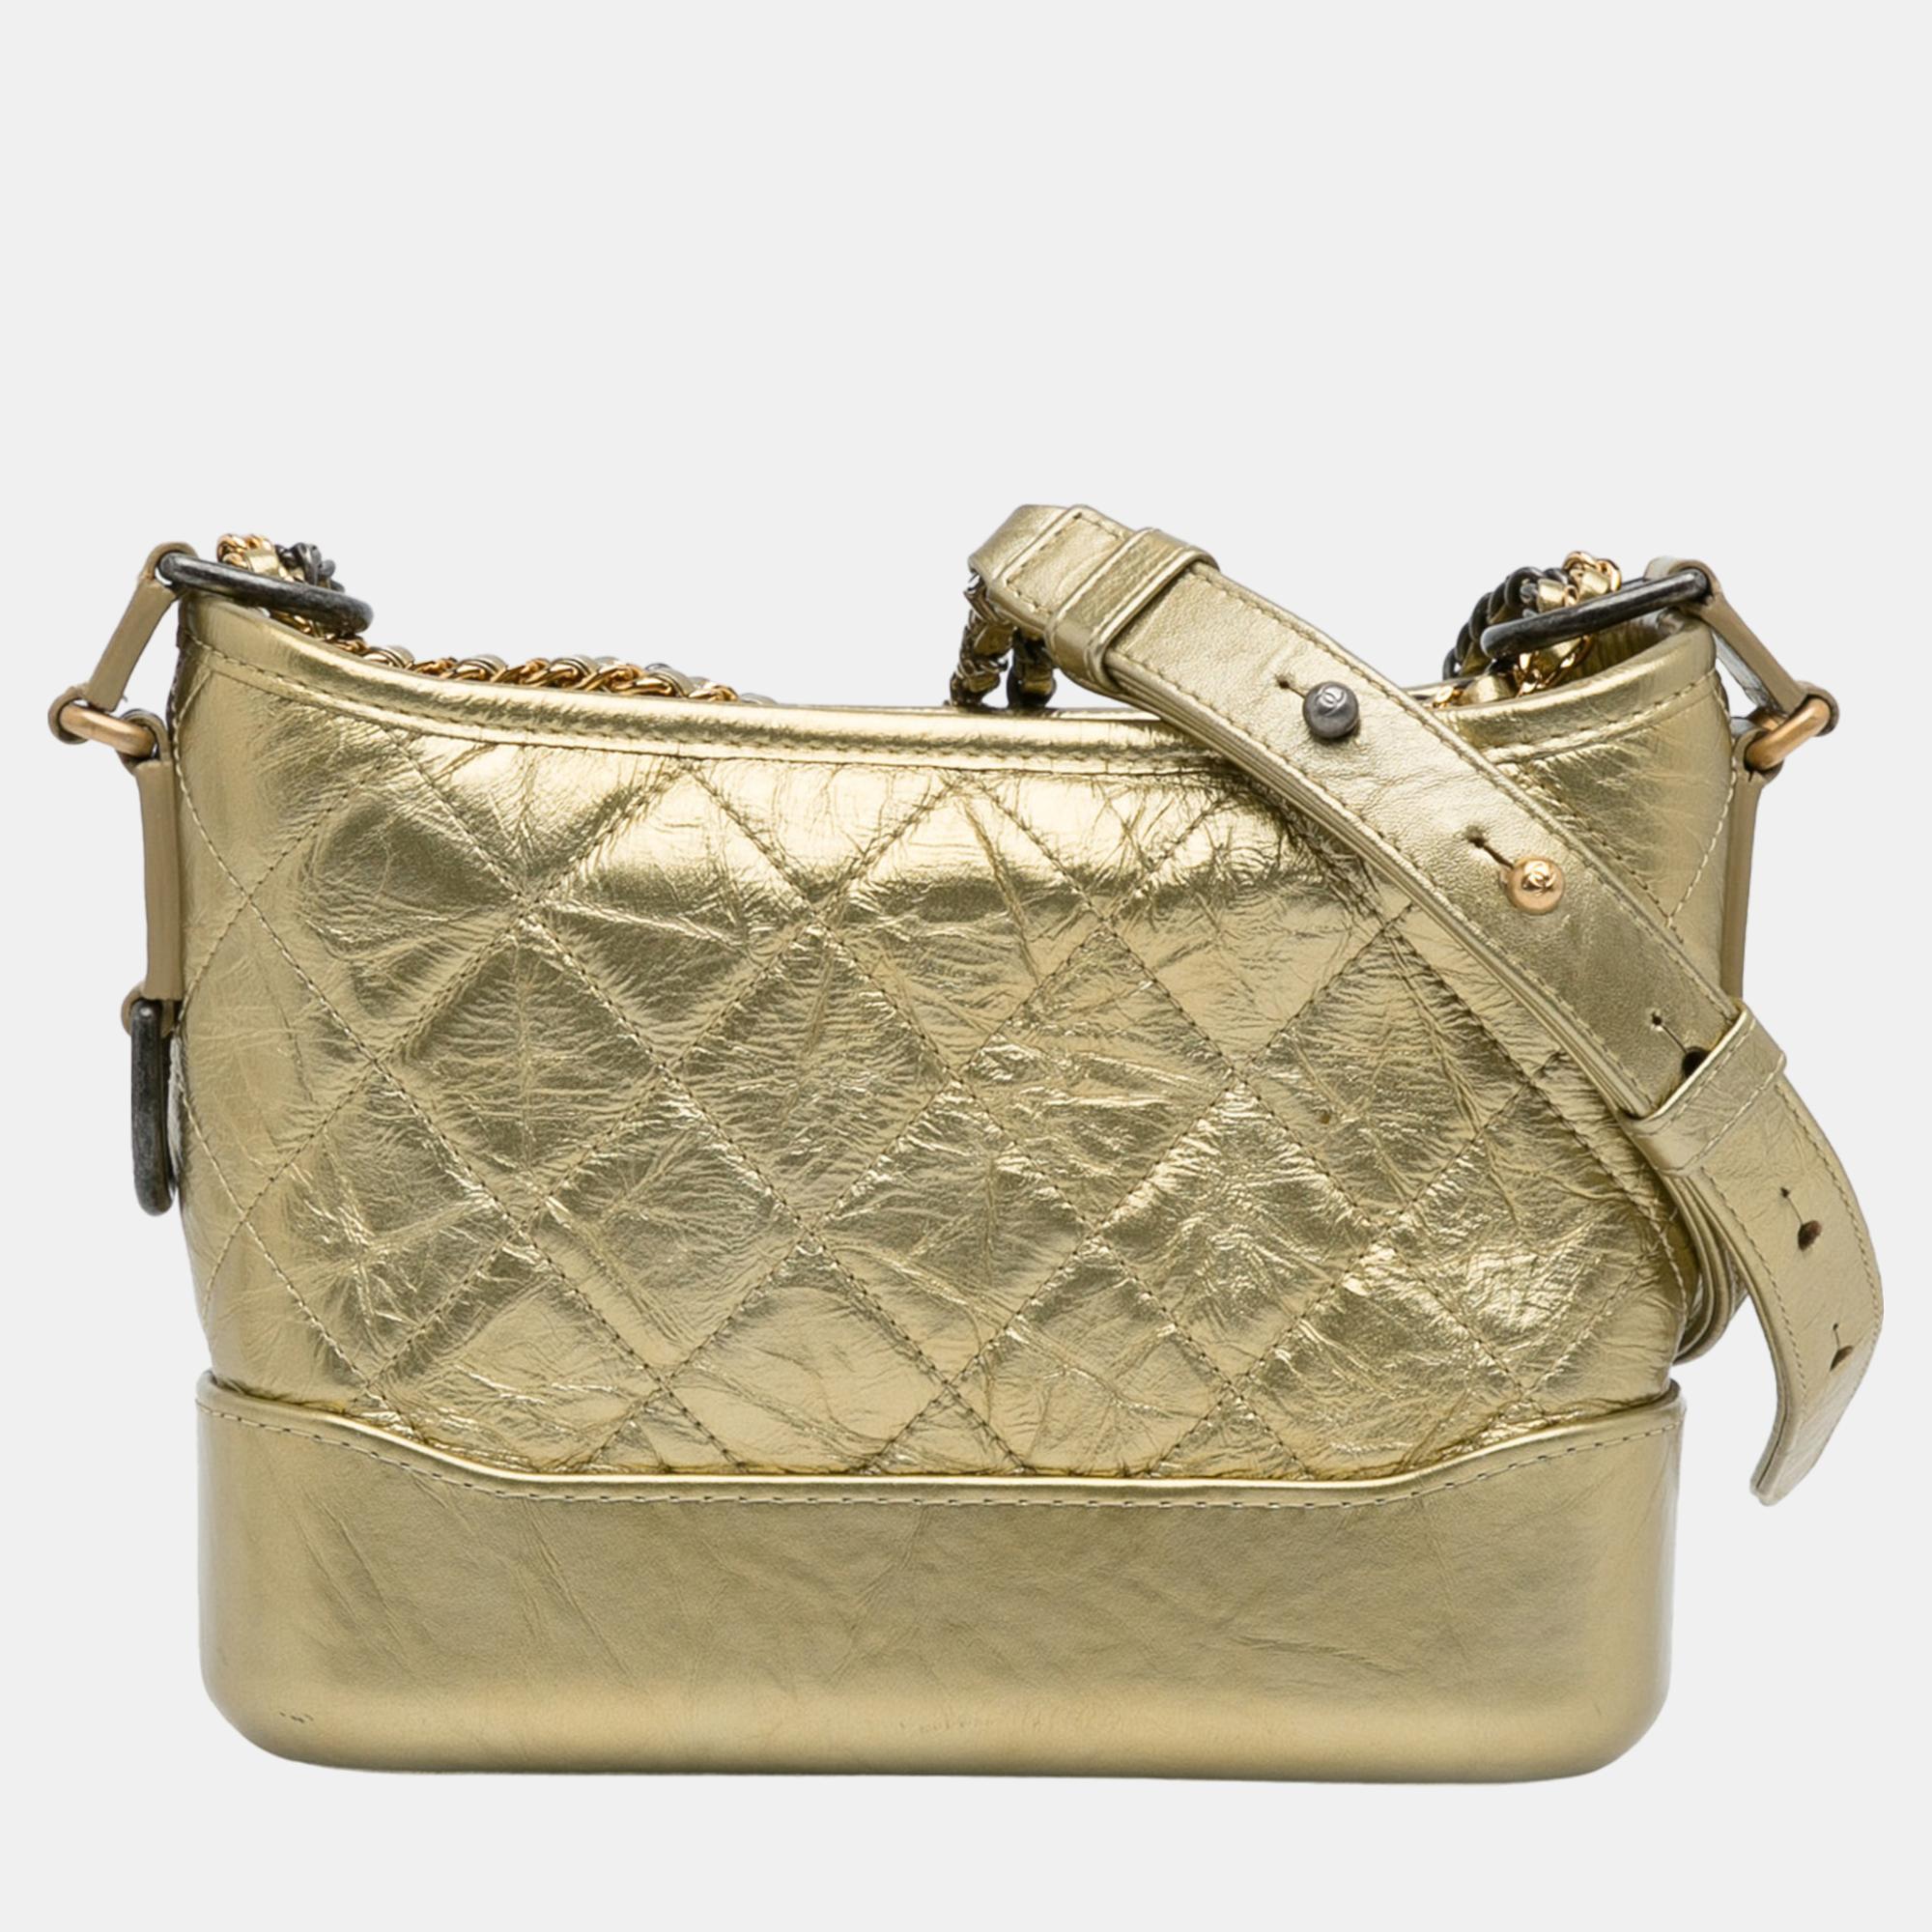 Chanel gold small metallic gabrielle crossbody bag